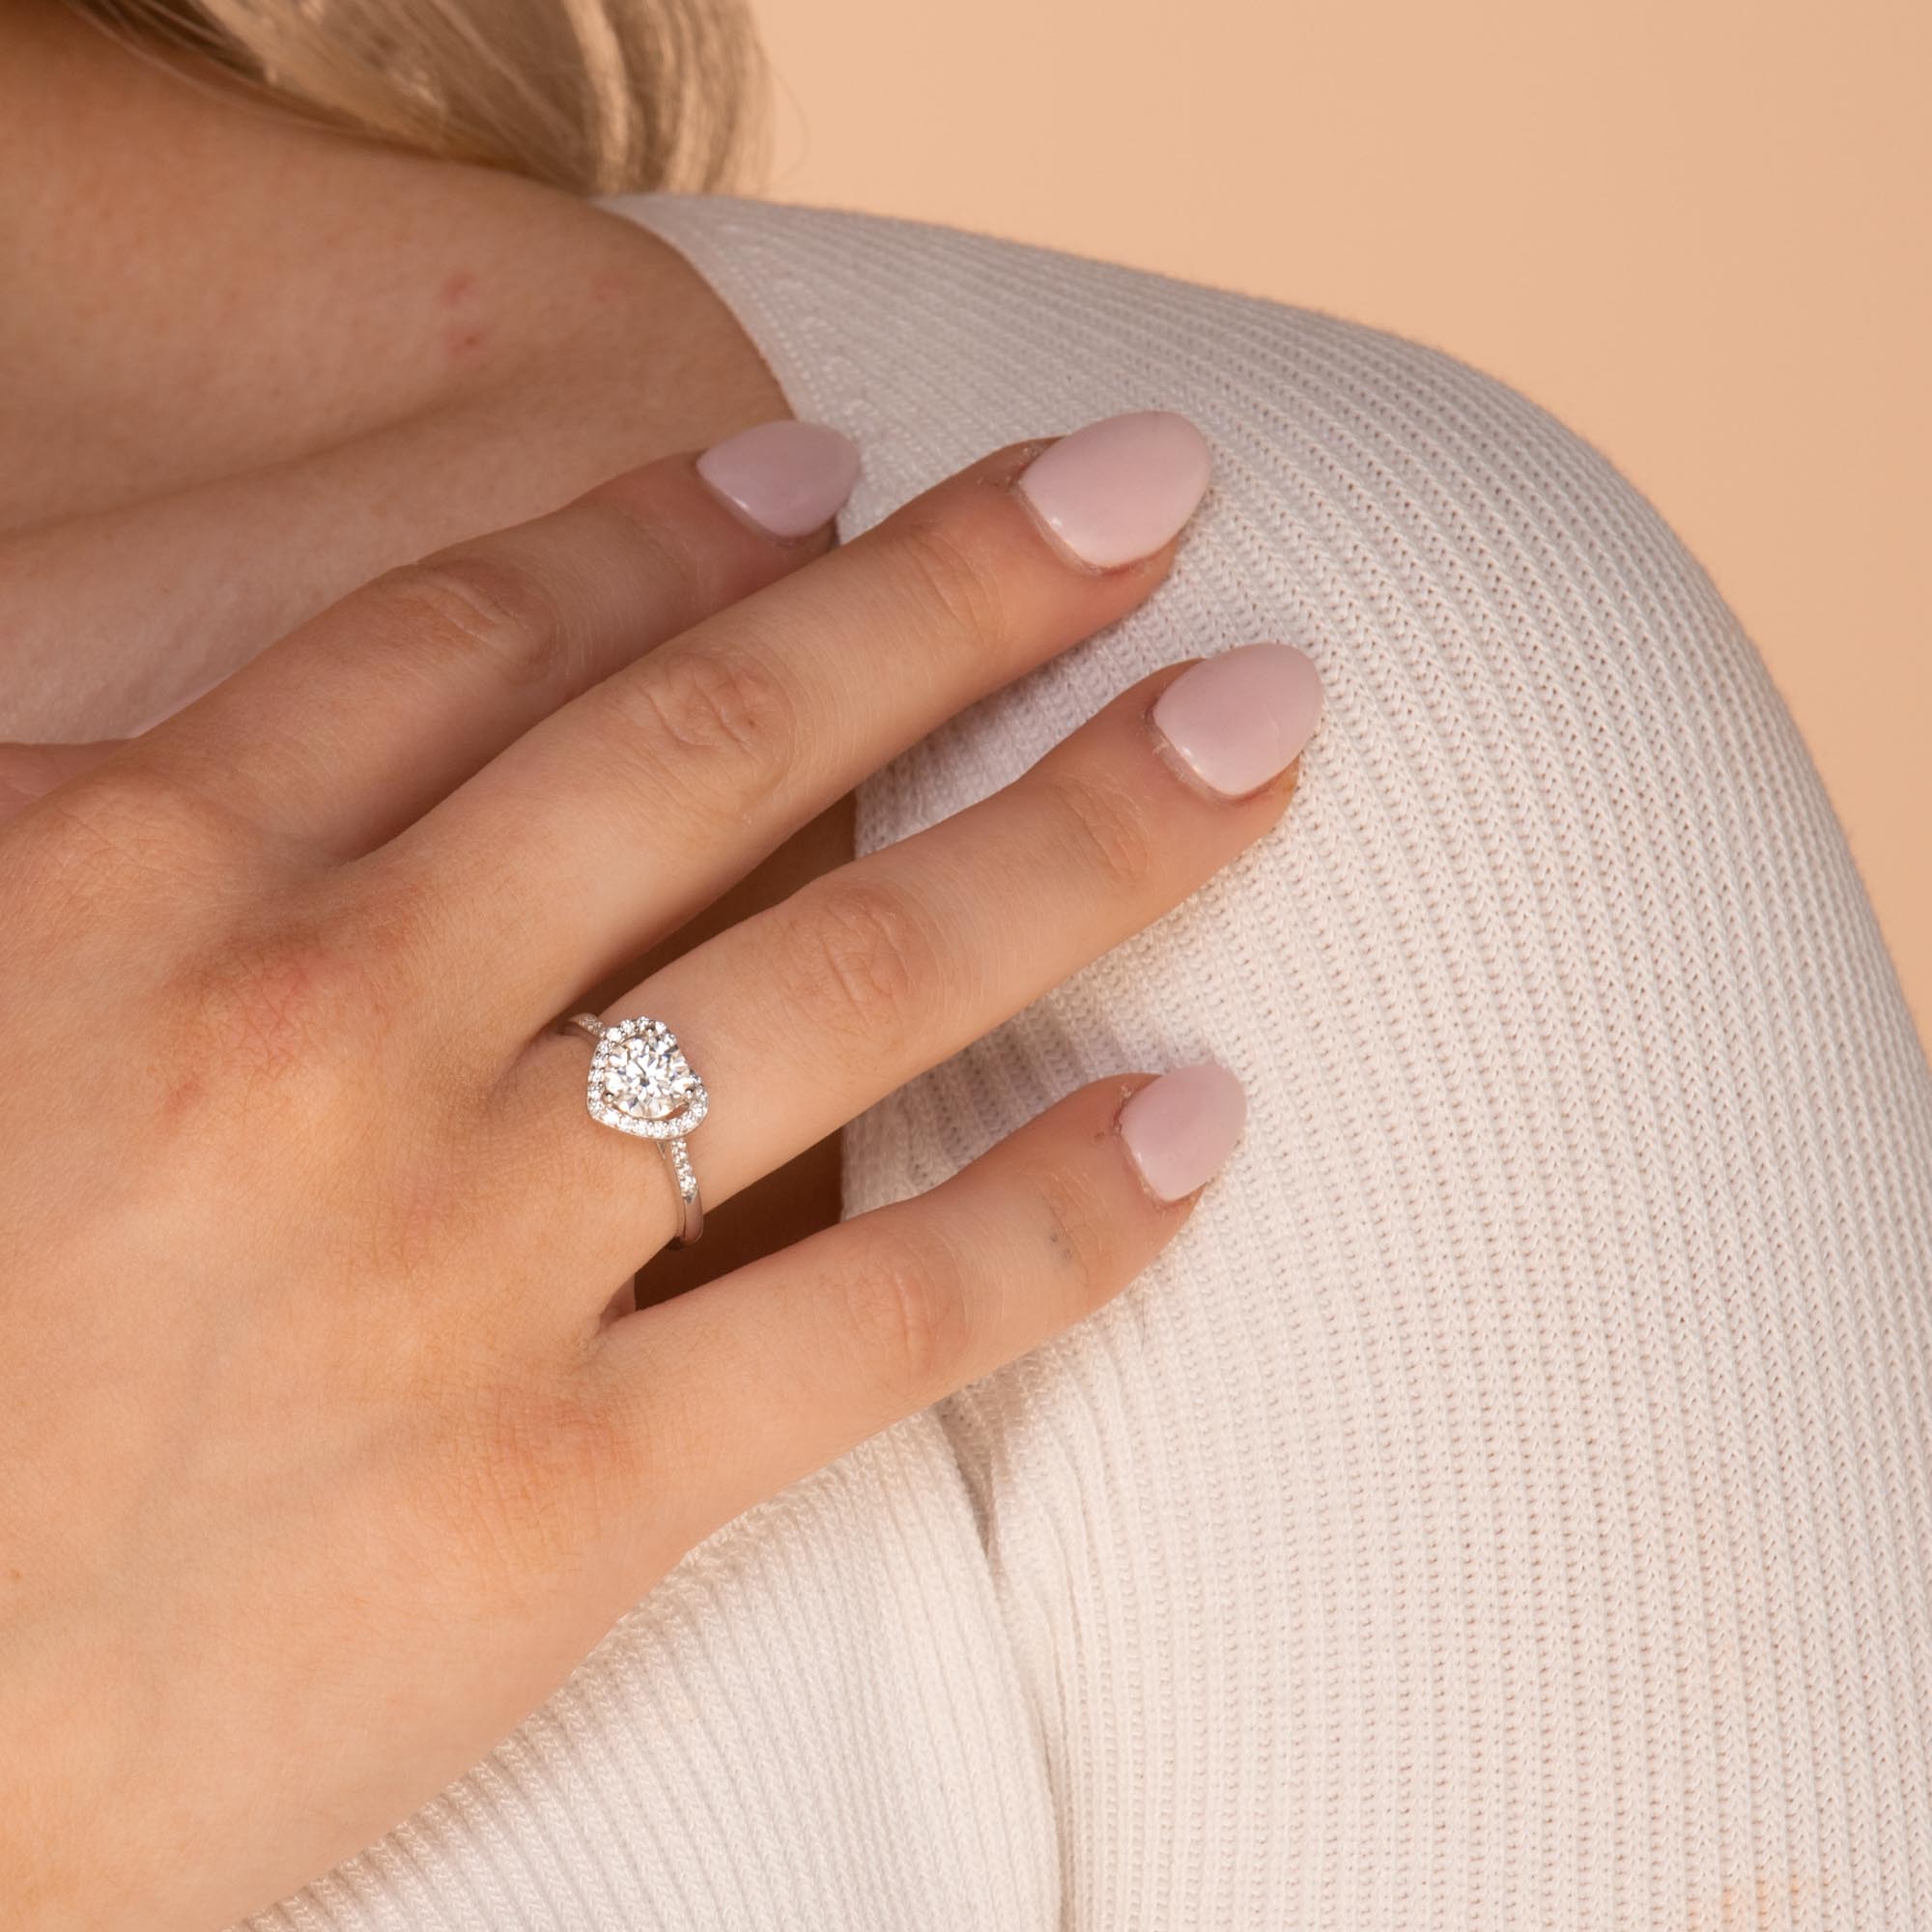 1 ct The Violet Moissanite Diamond Engagement Ring